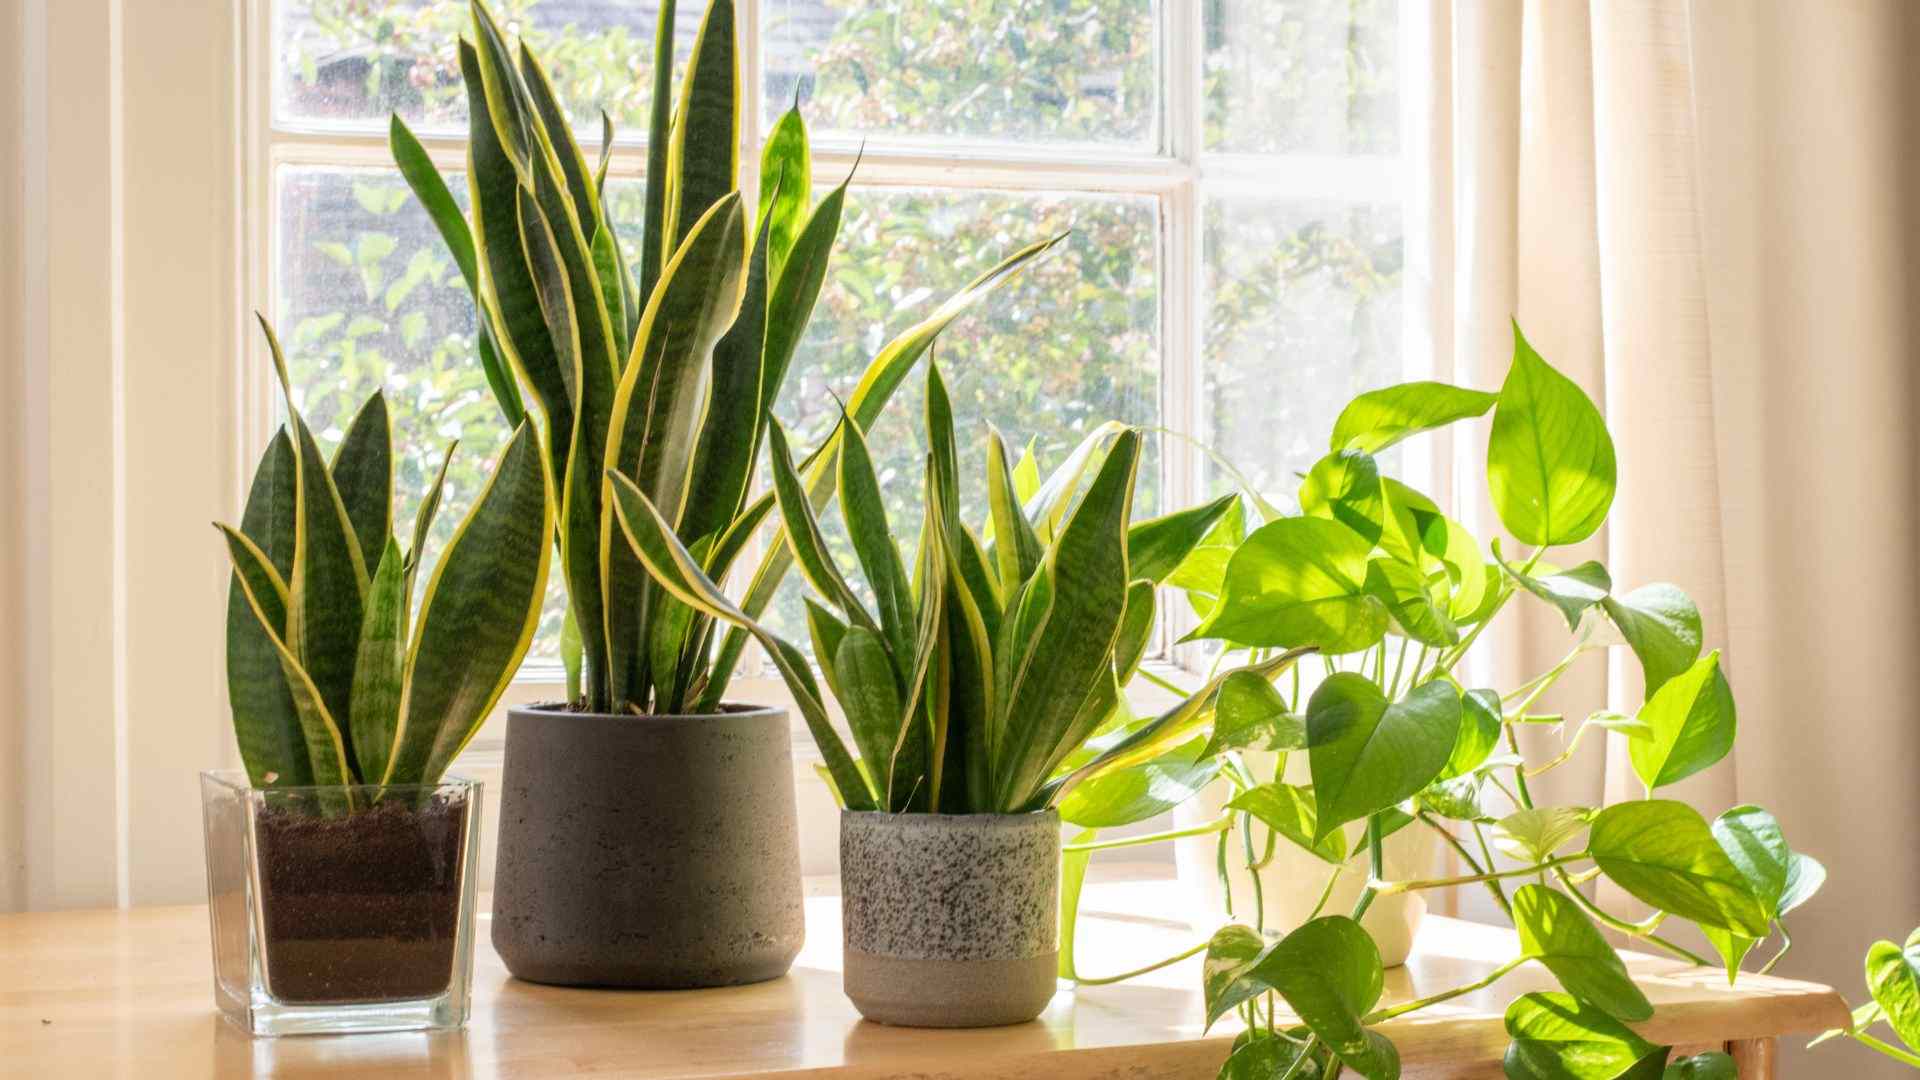 Home Gardening plants in a window